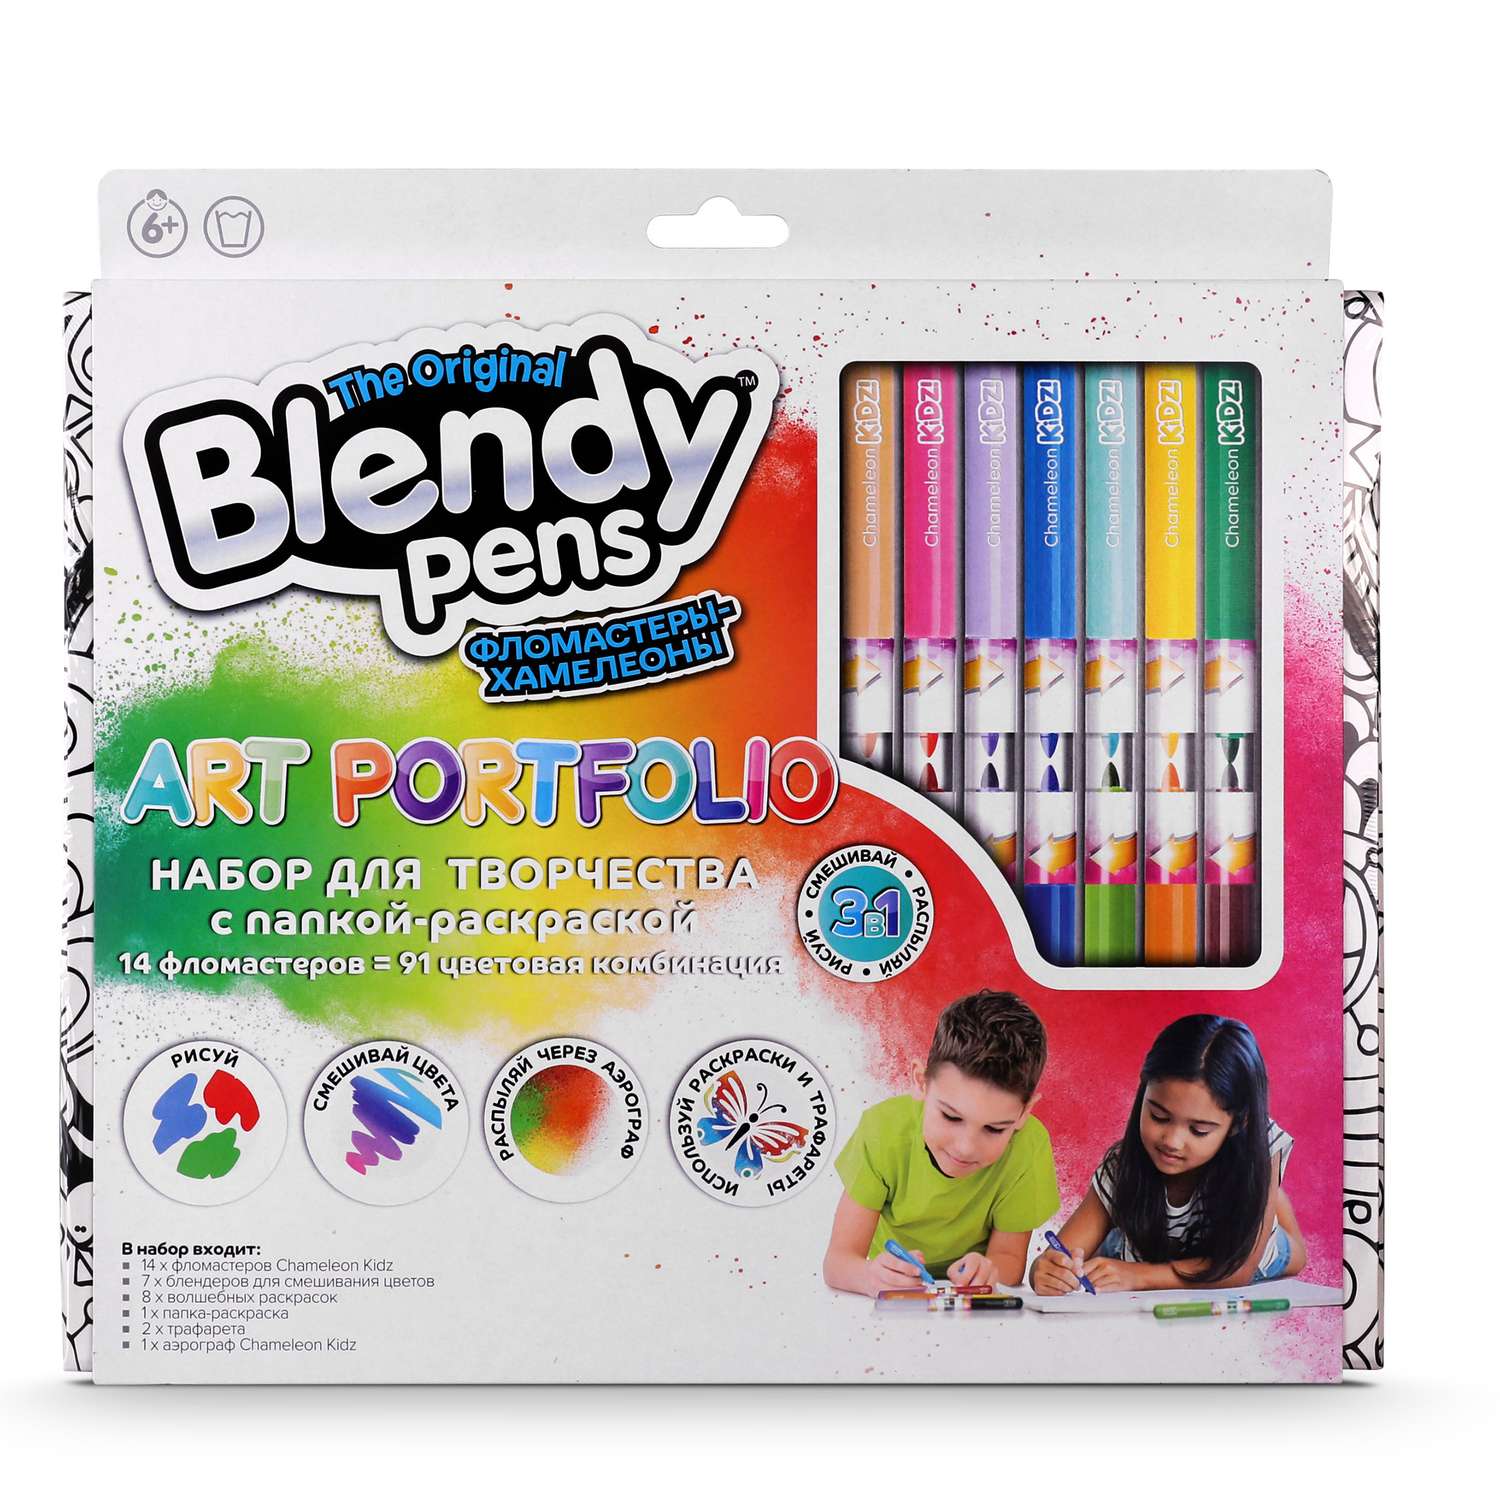 Набор для творчества Blendy pens Фломастеры хамелеоны 14 штук с аэрографом - фото 1